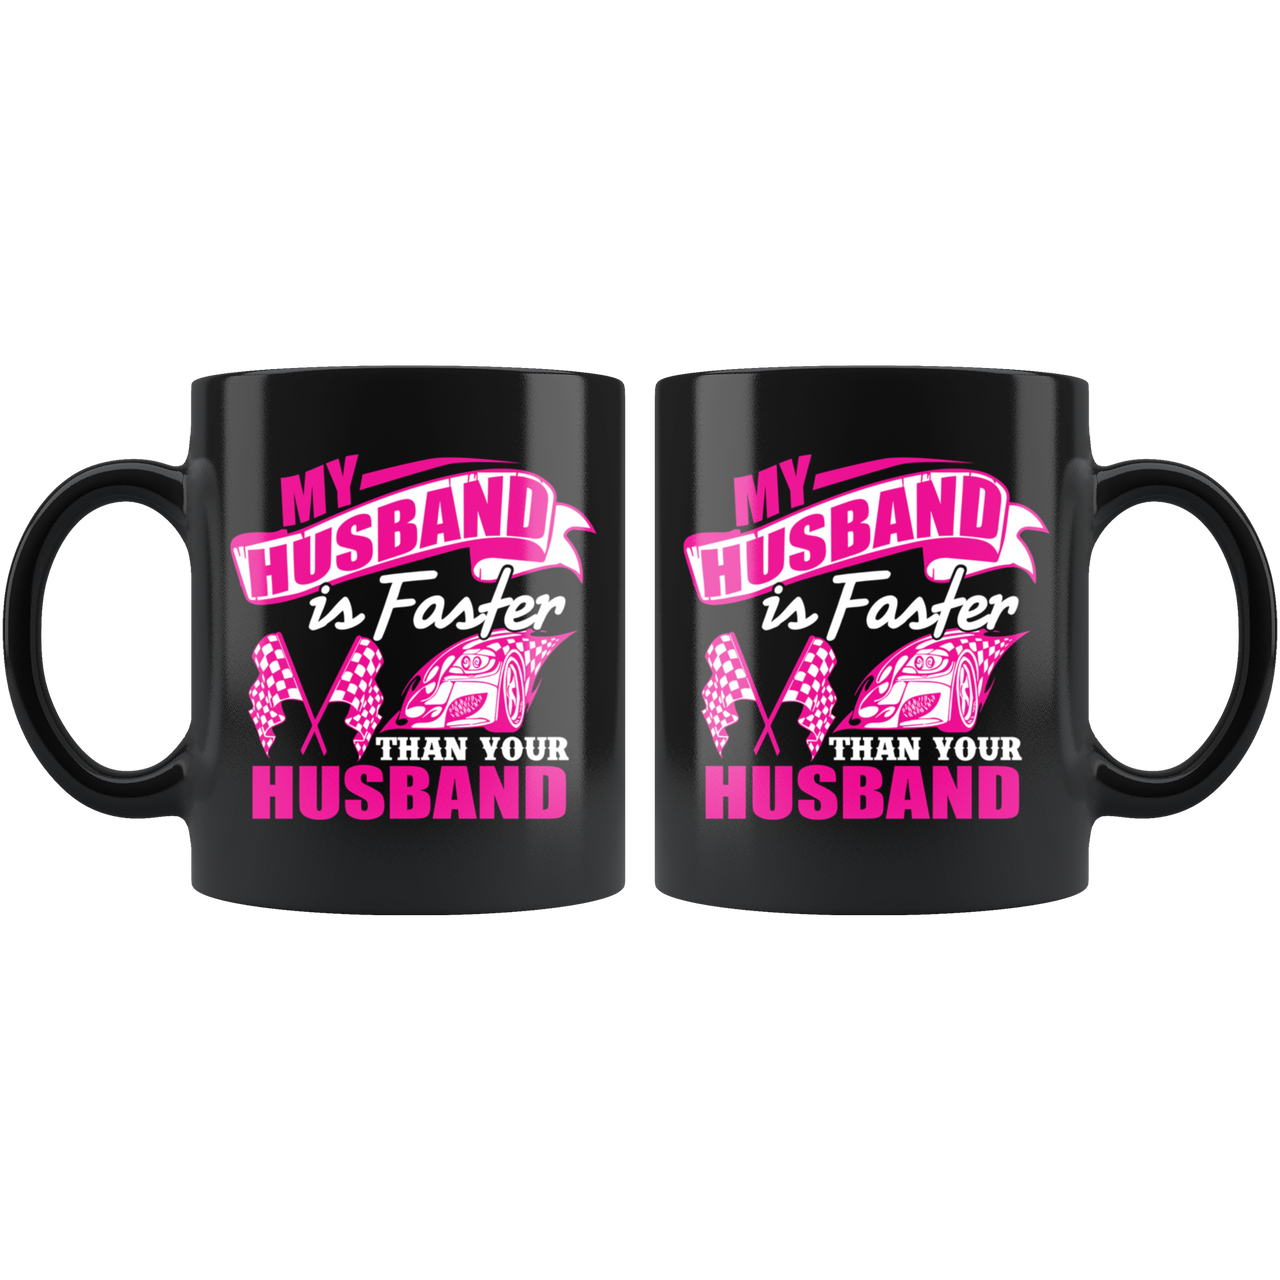 My Husband Is Faster Than Your Husband Mug!